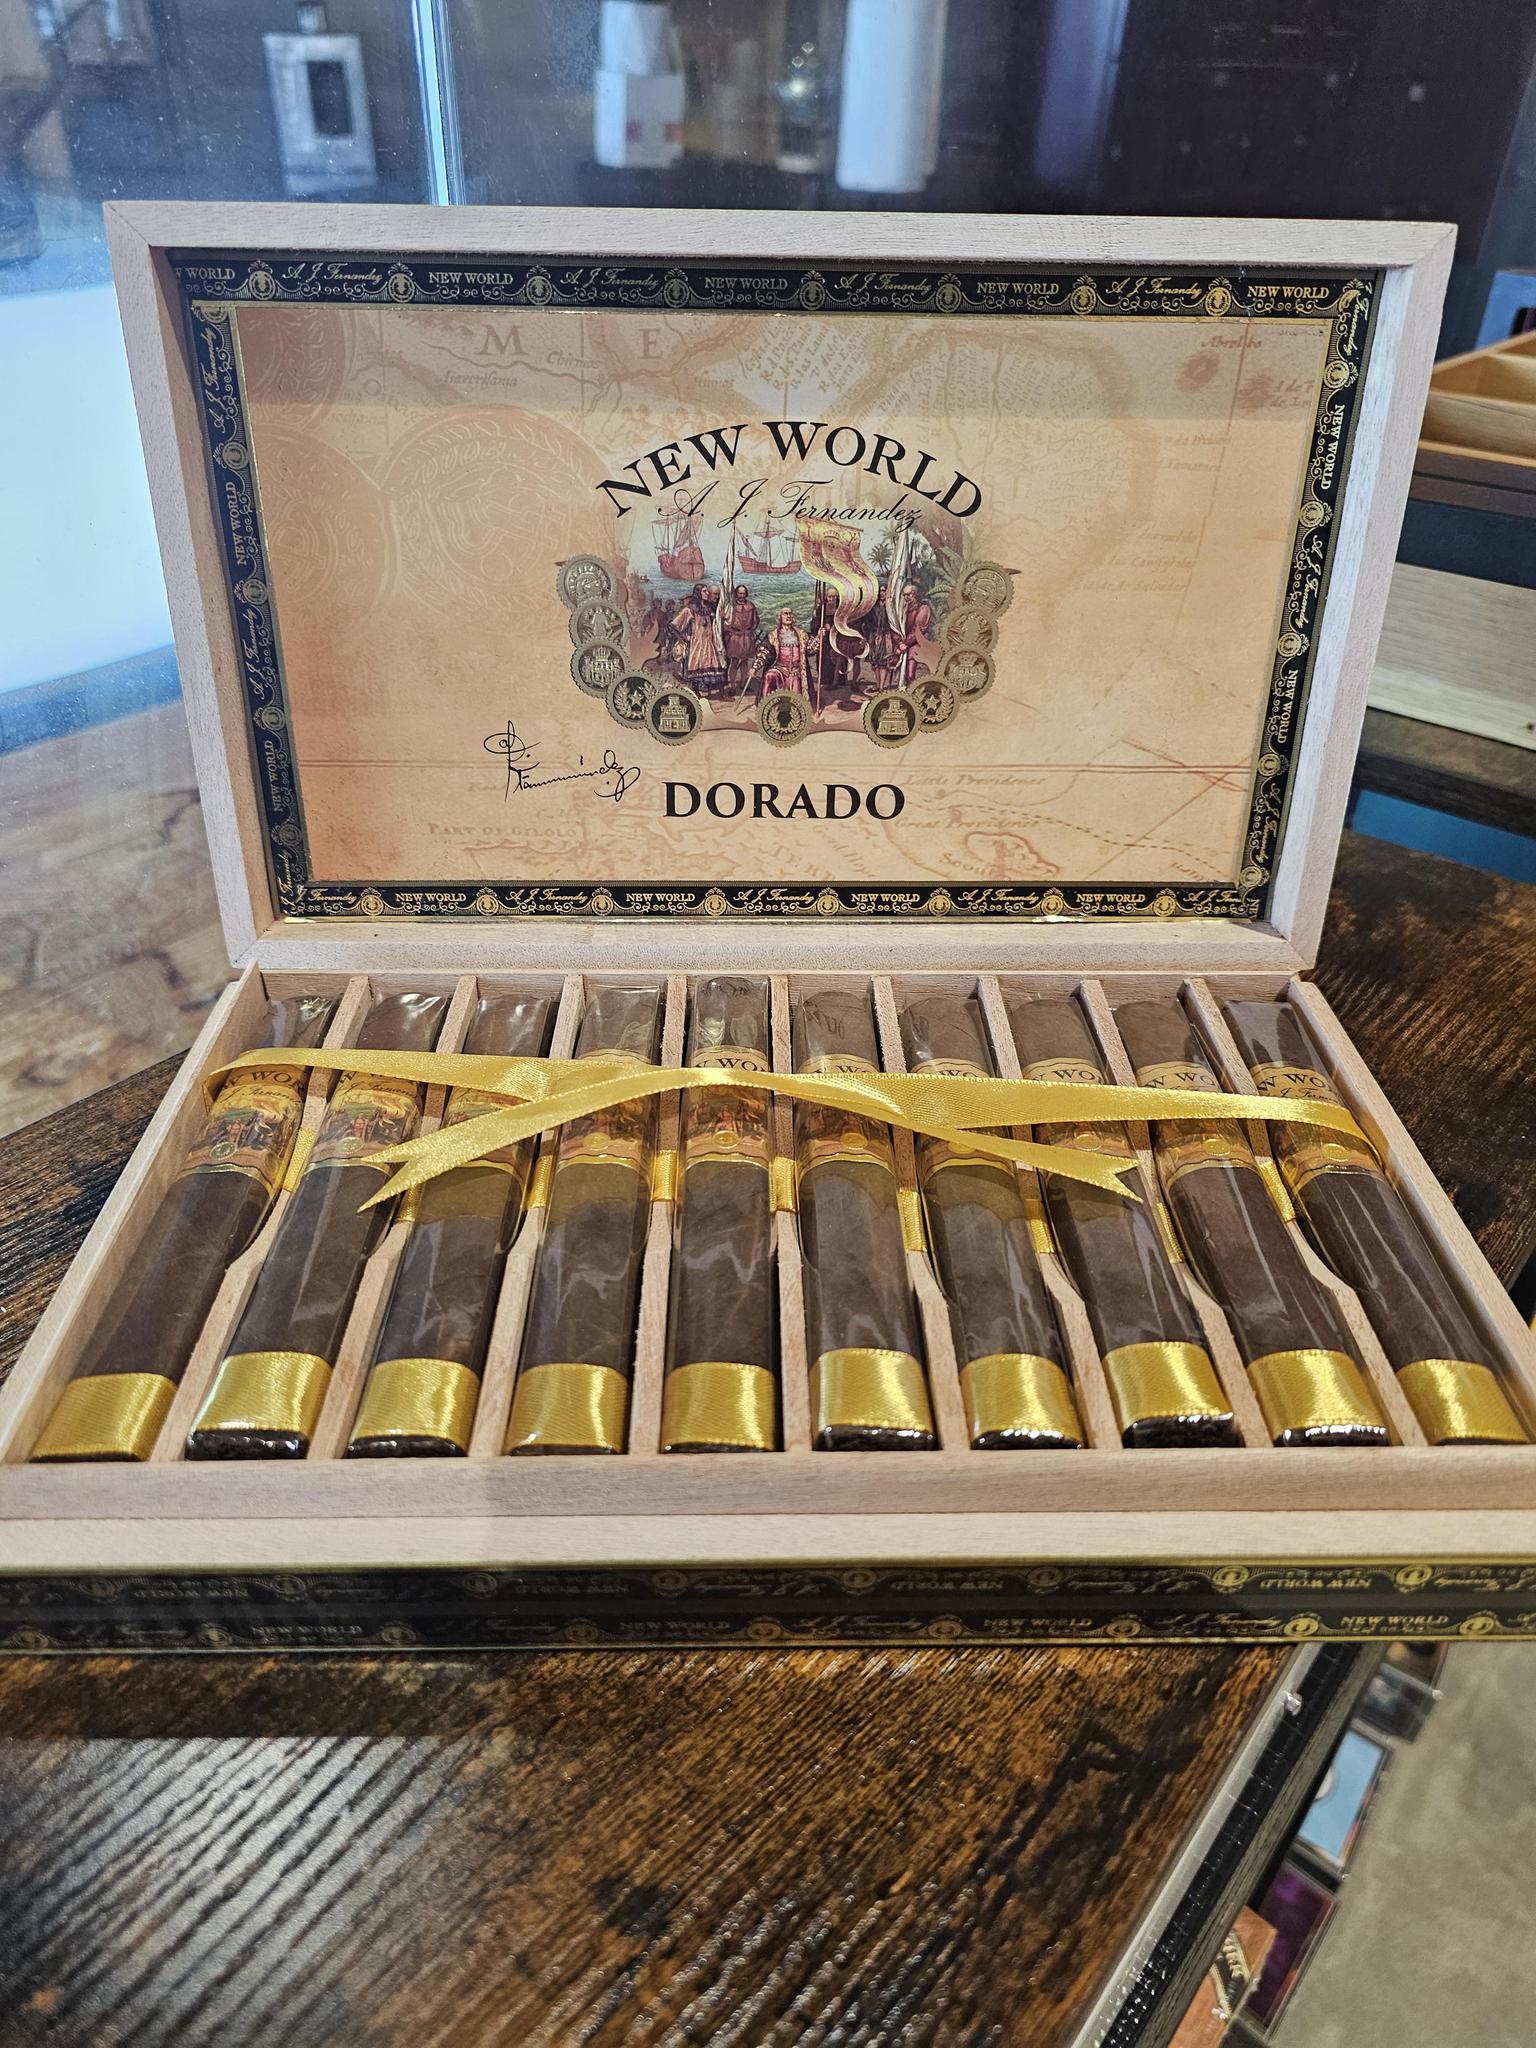 -AJF New World Dorado Gordito (Box)